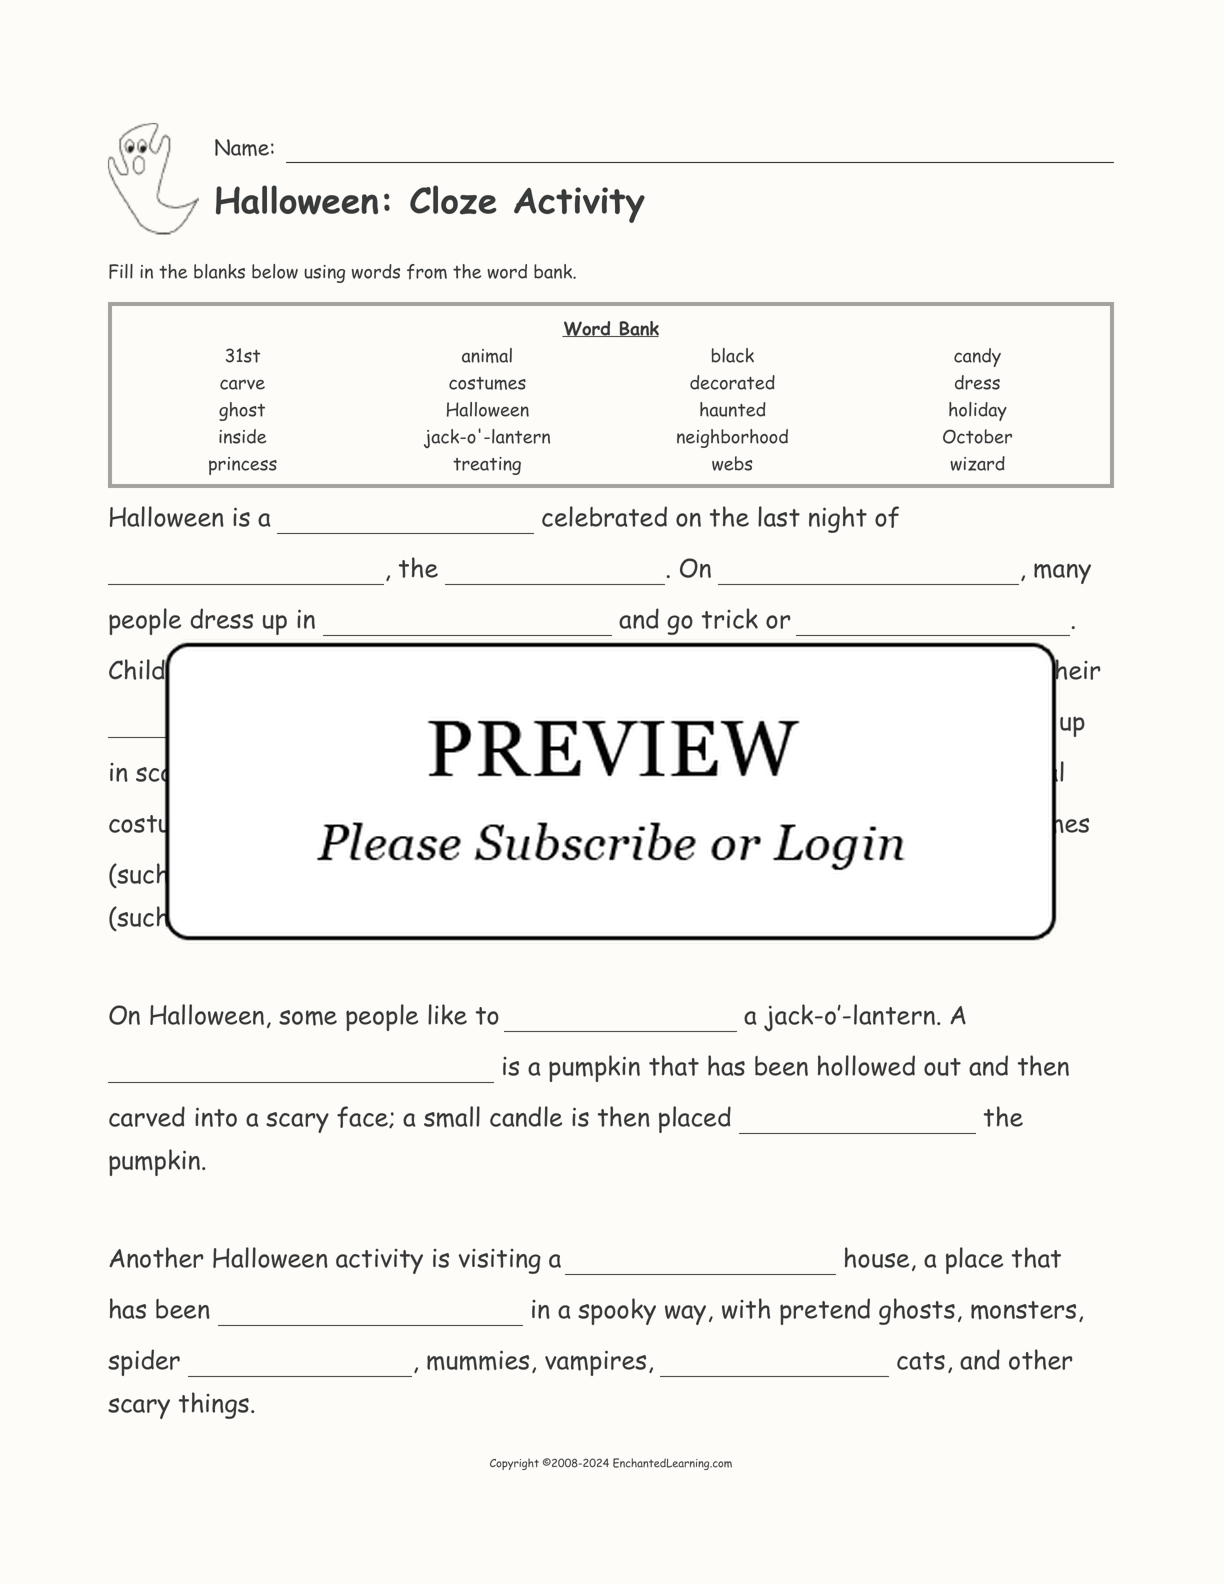 Halloween: Cloze Activity interactive worksheet page 1